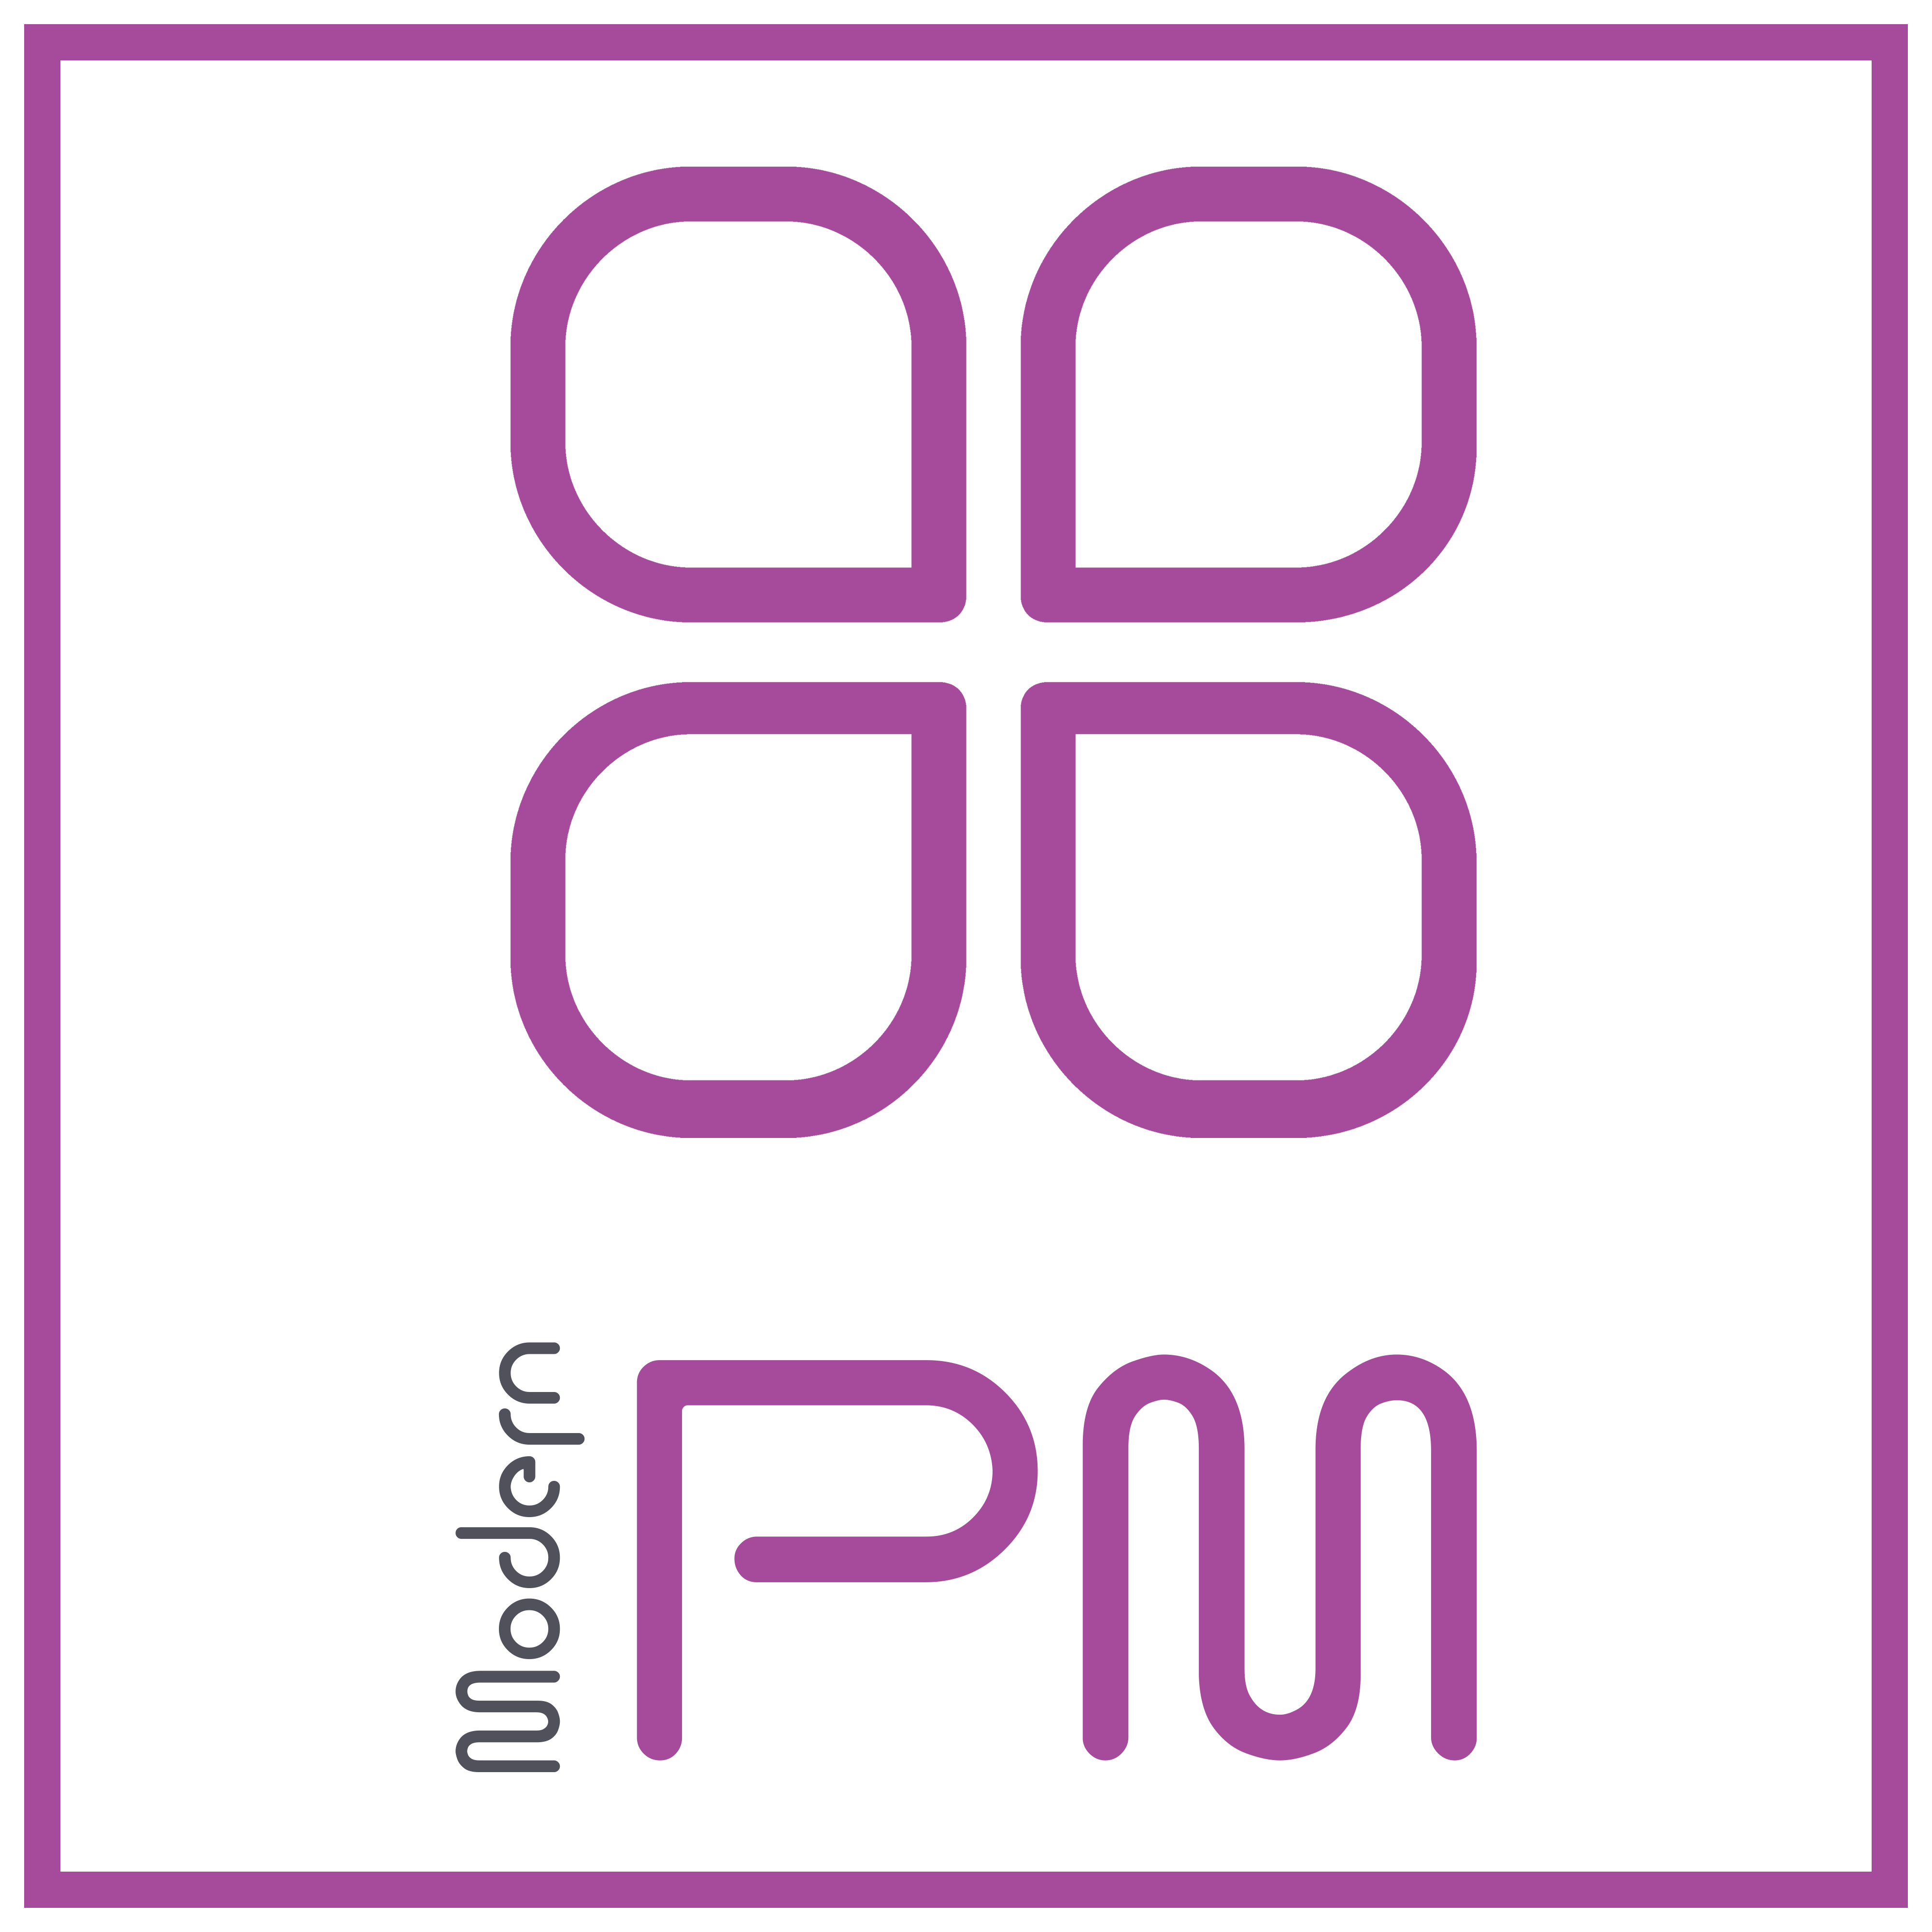 MPM logo